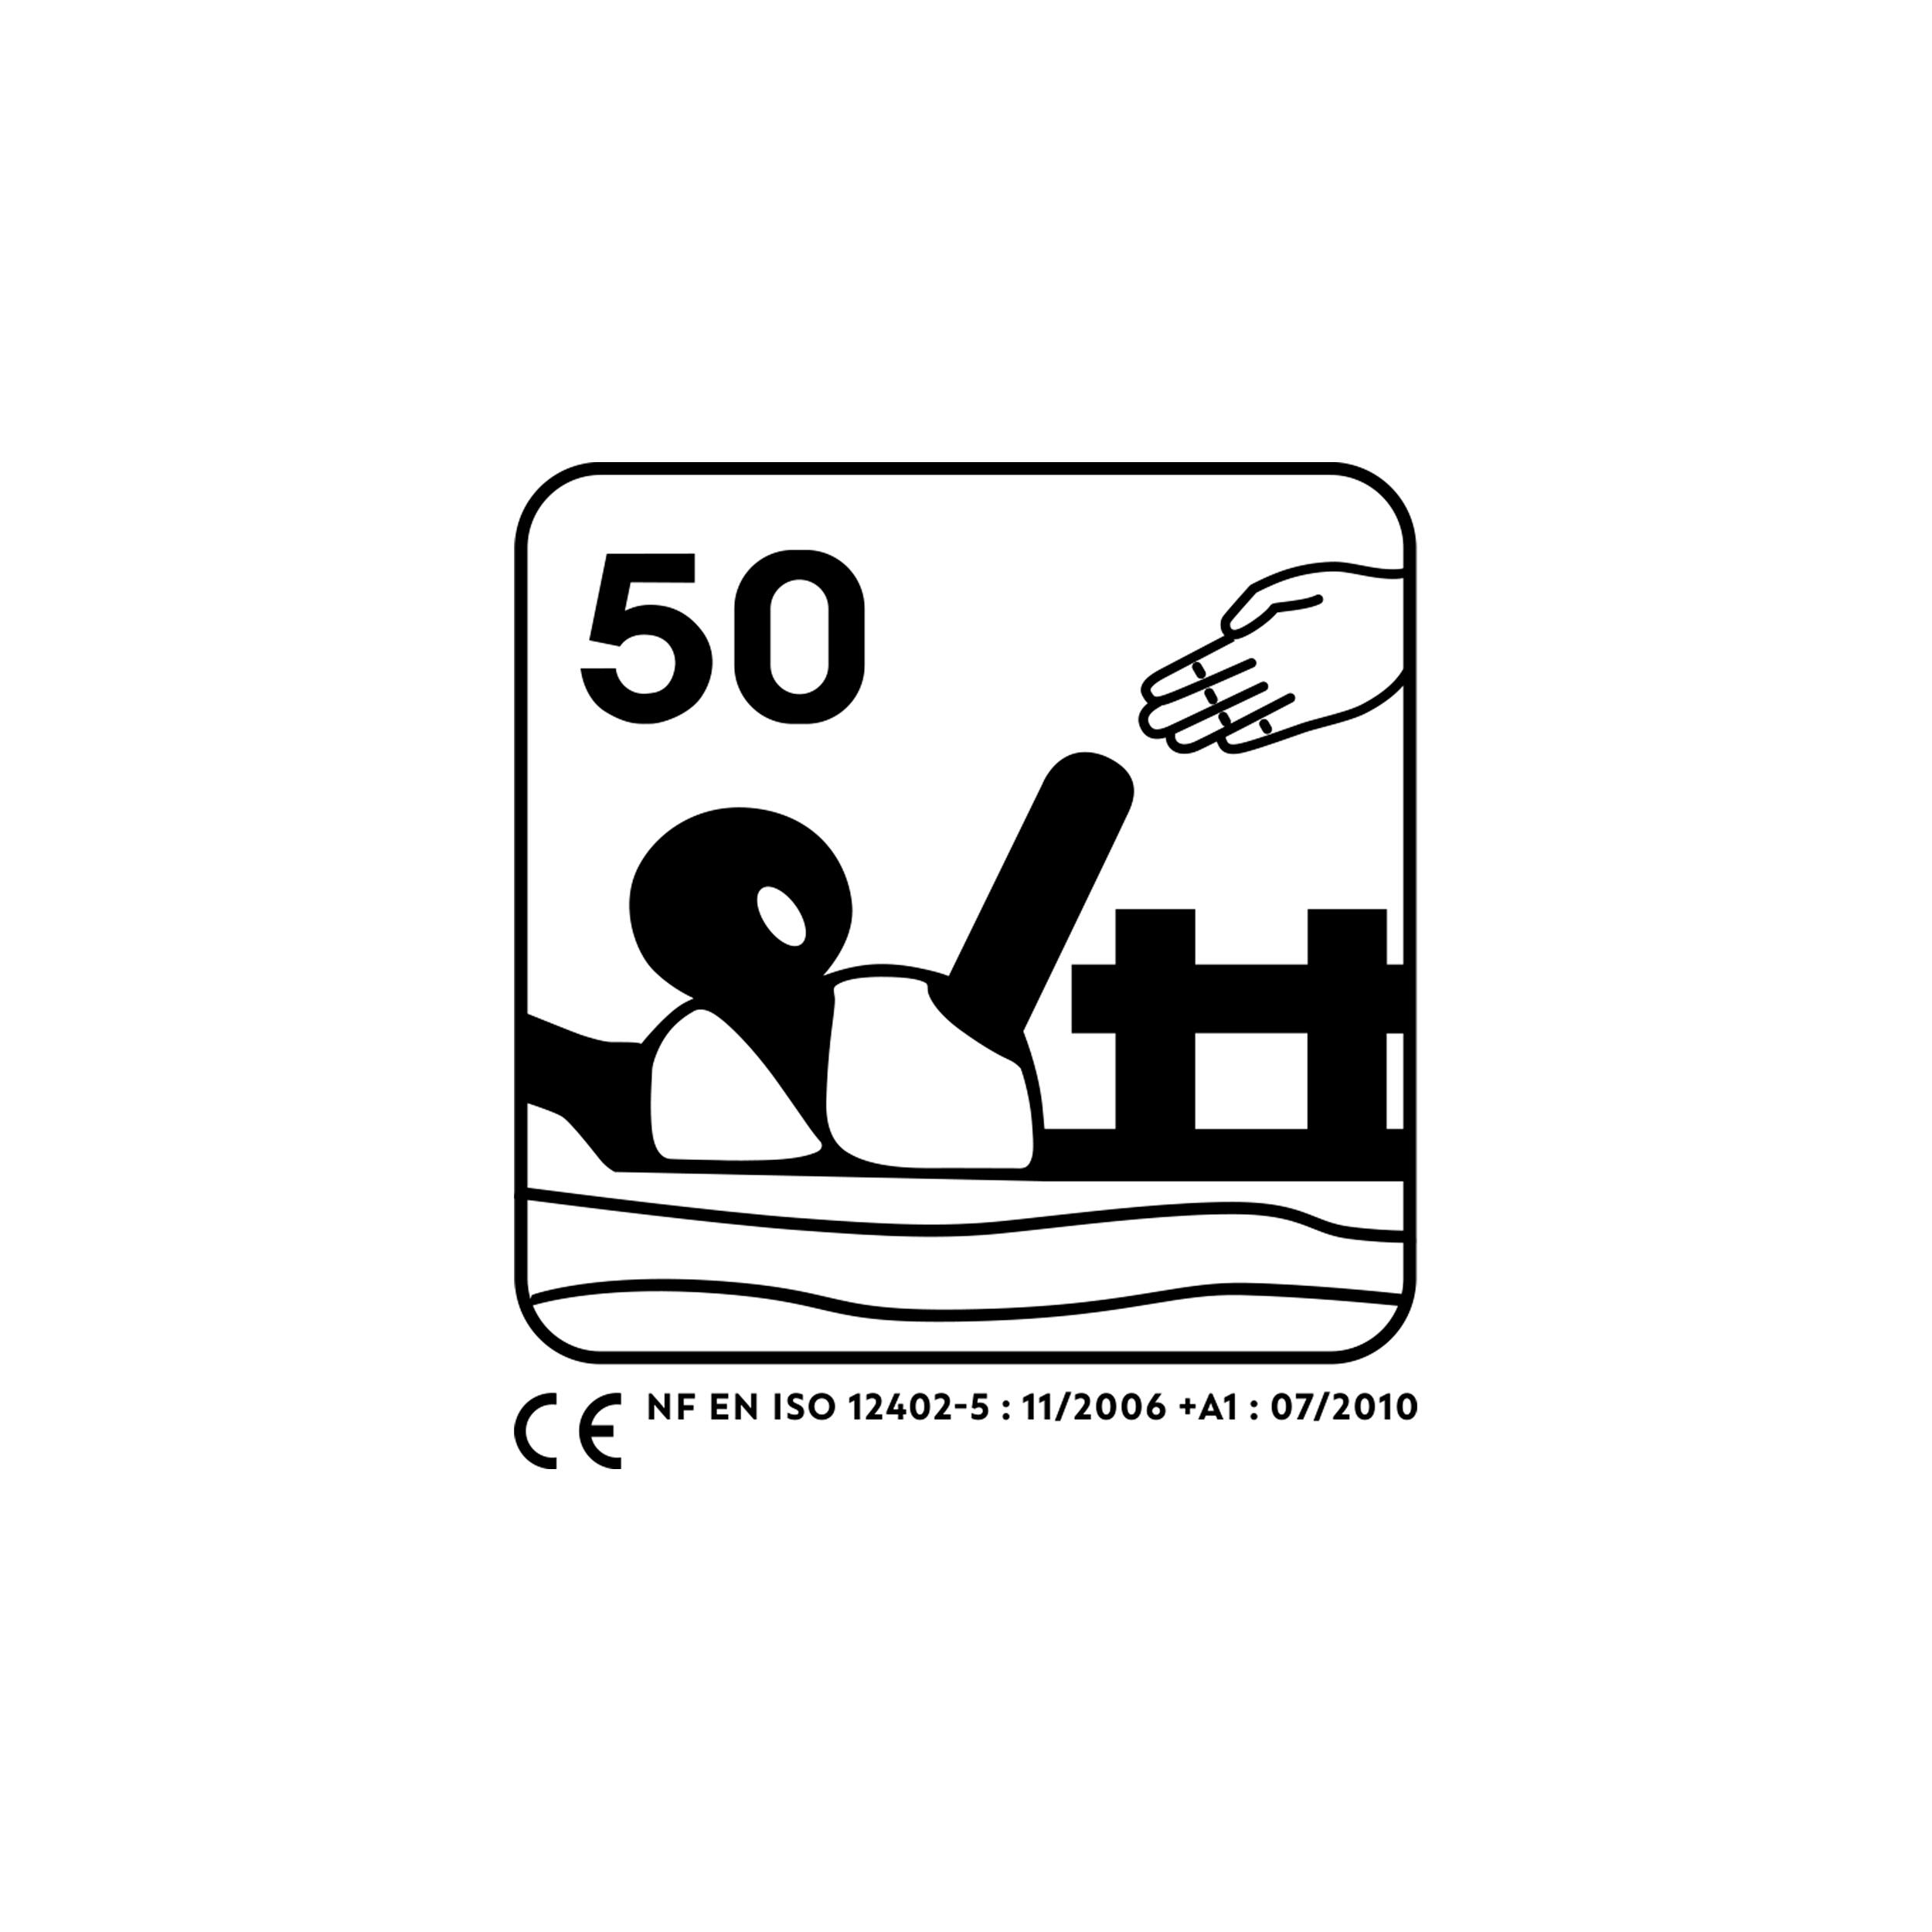 Women's 50 N Wingfoil Wakeboard and Buoyancy Aid -500 5/5